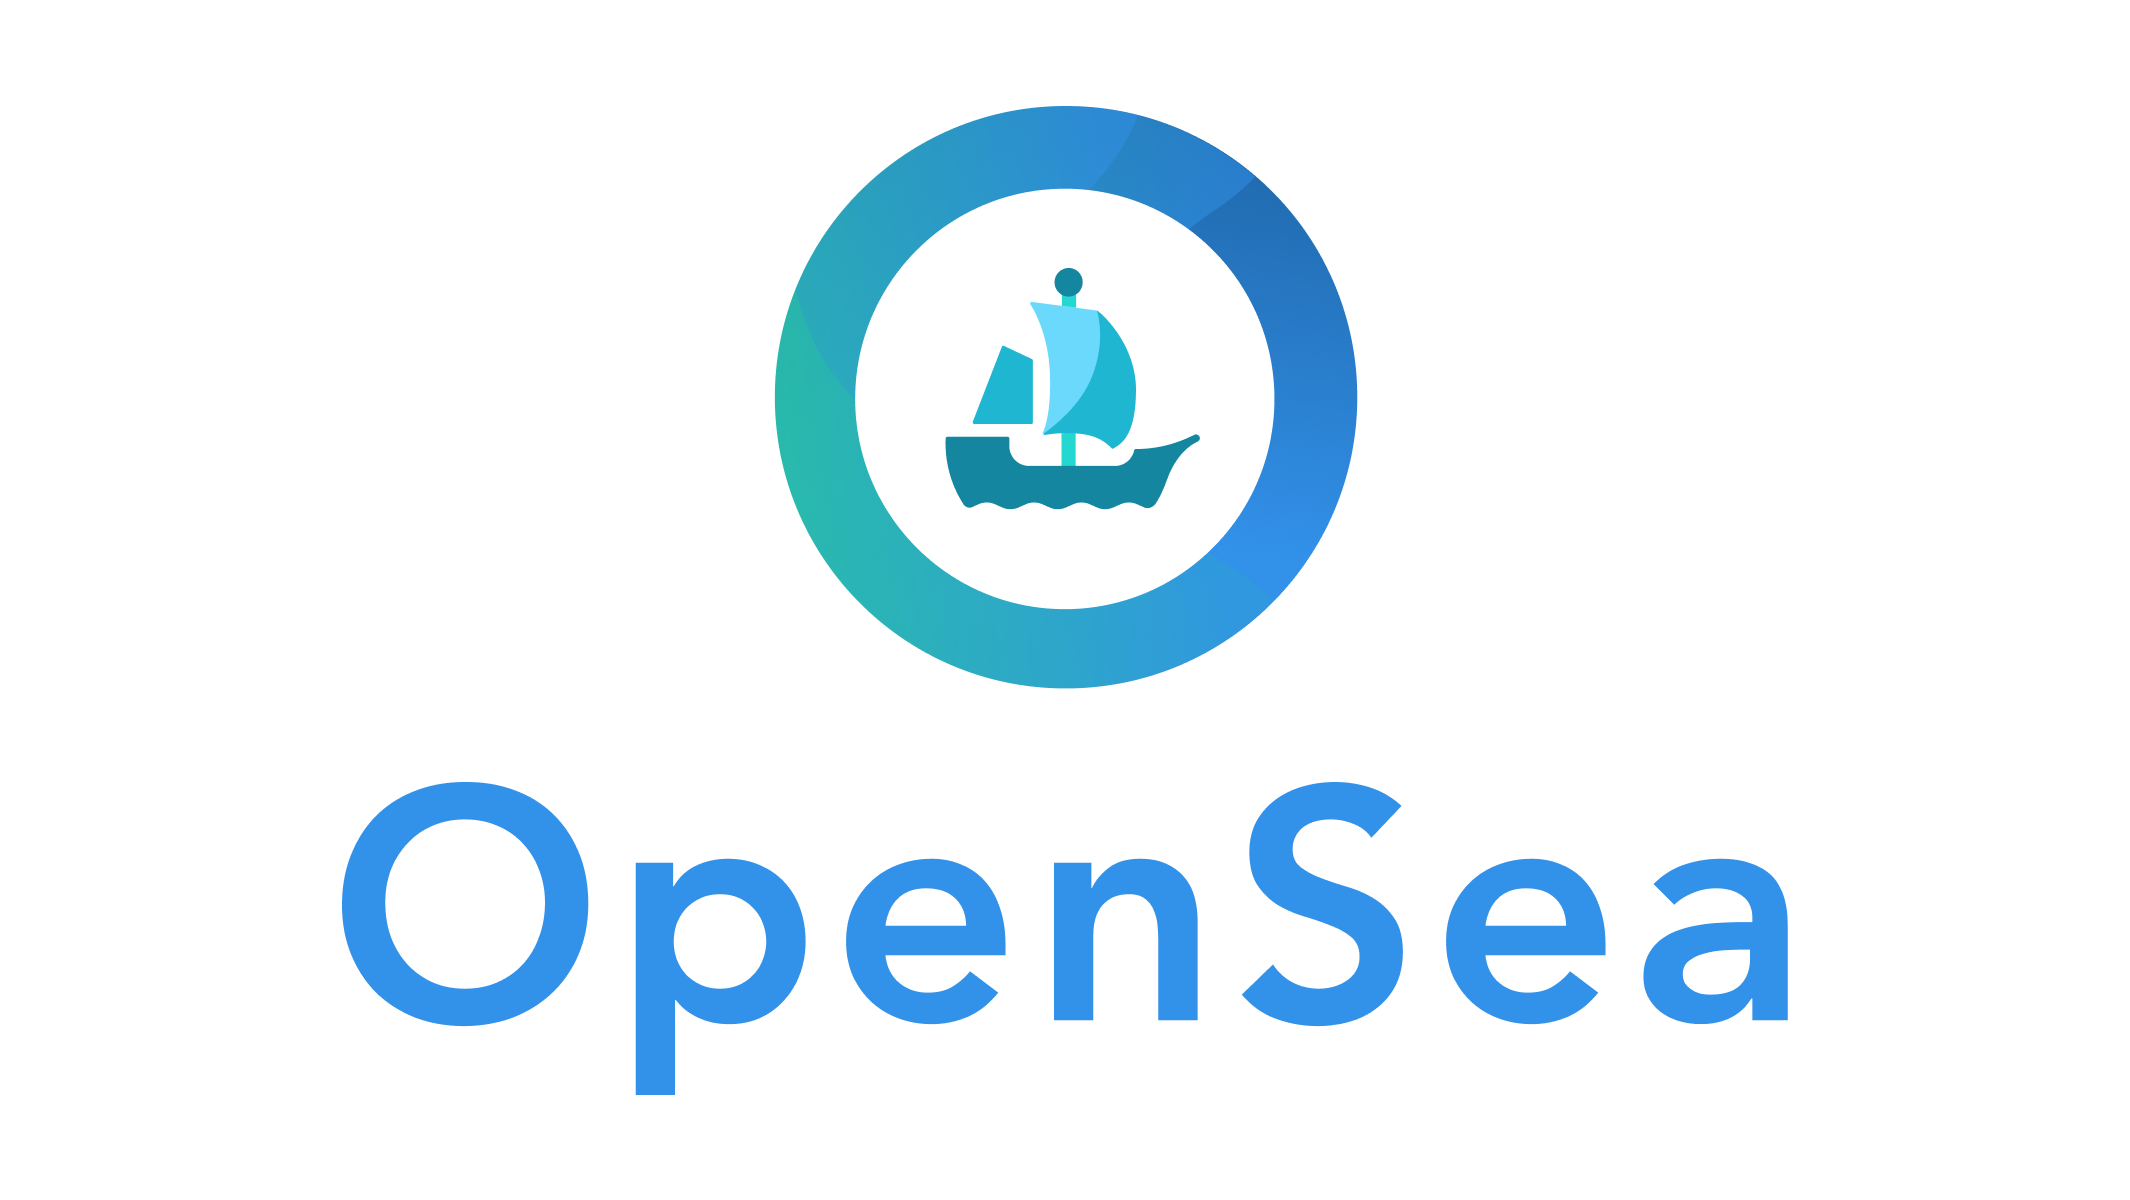 OpenSea NFT marketplace